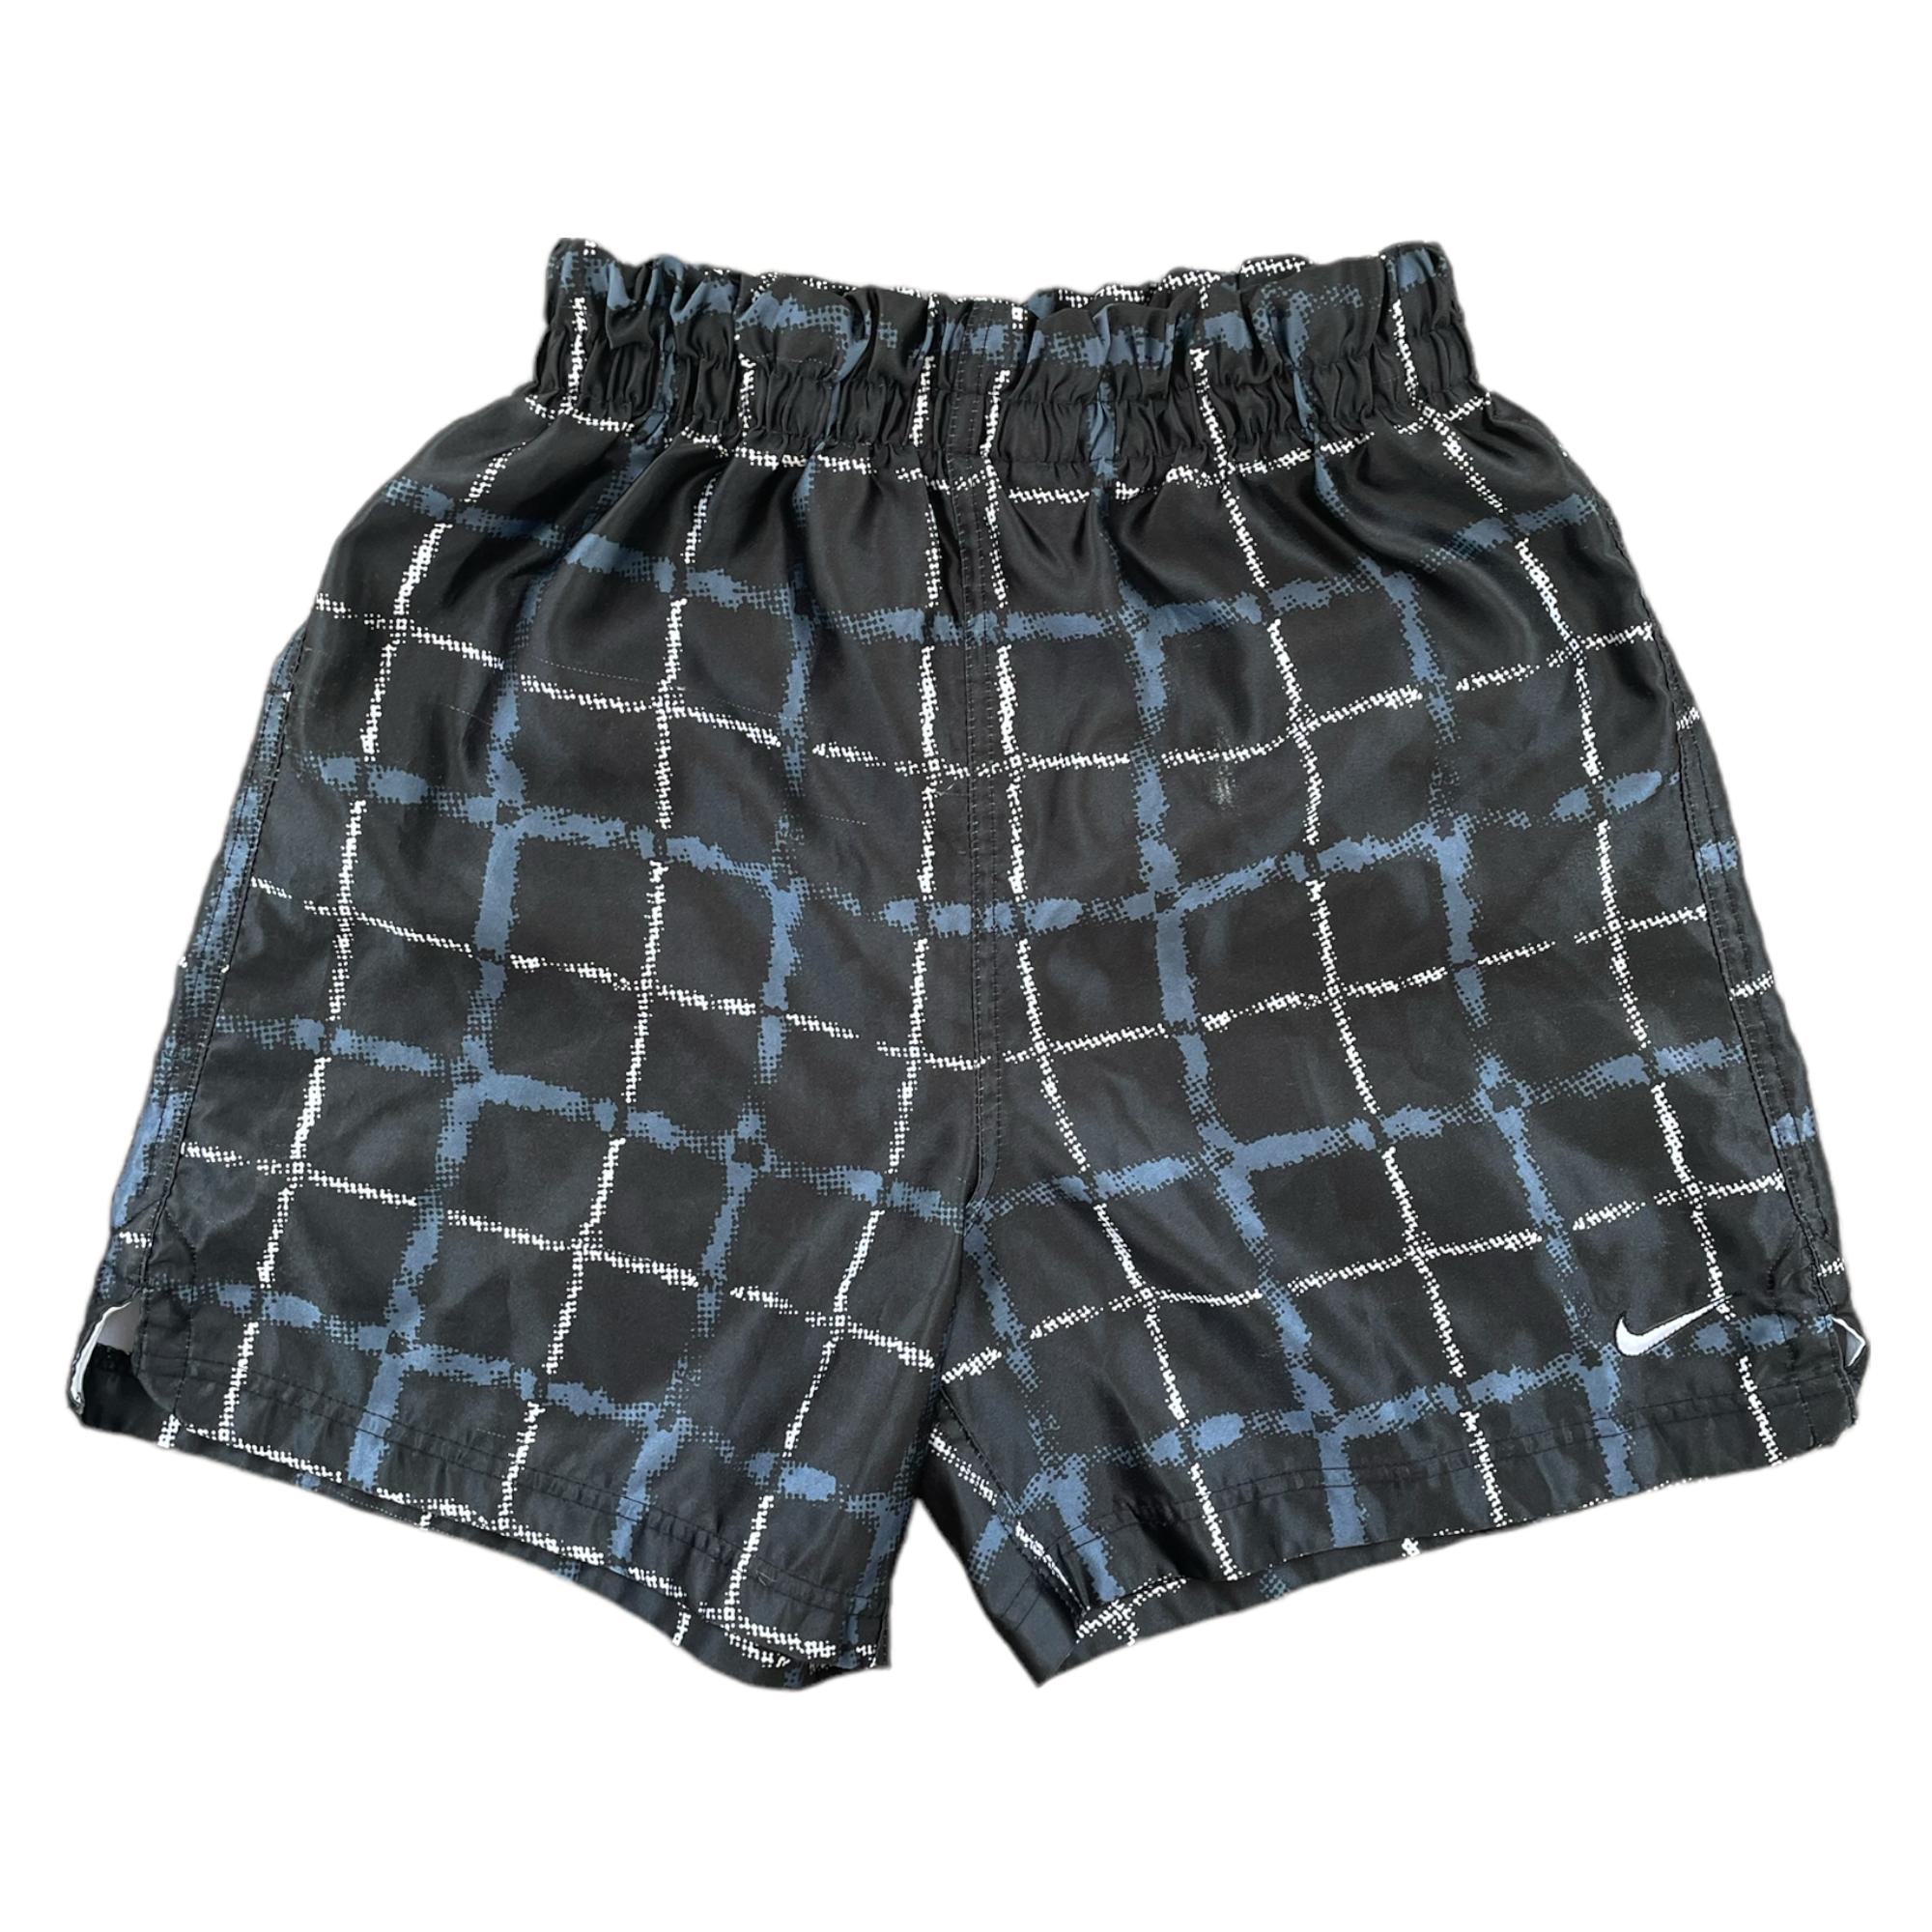 90s Rare Design Nike Training Shorts - Black Checkered - S